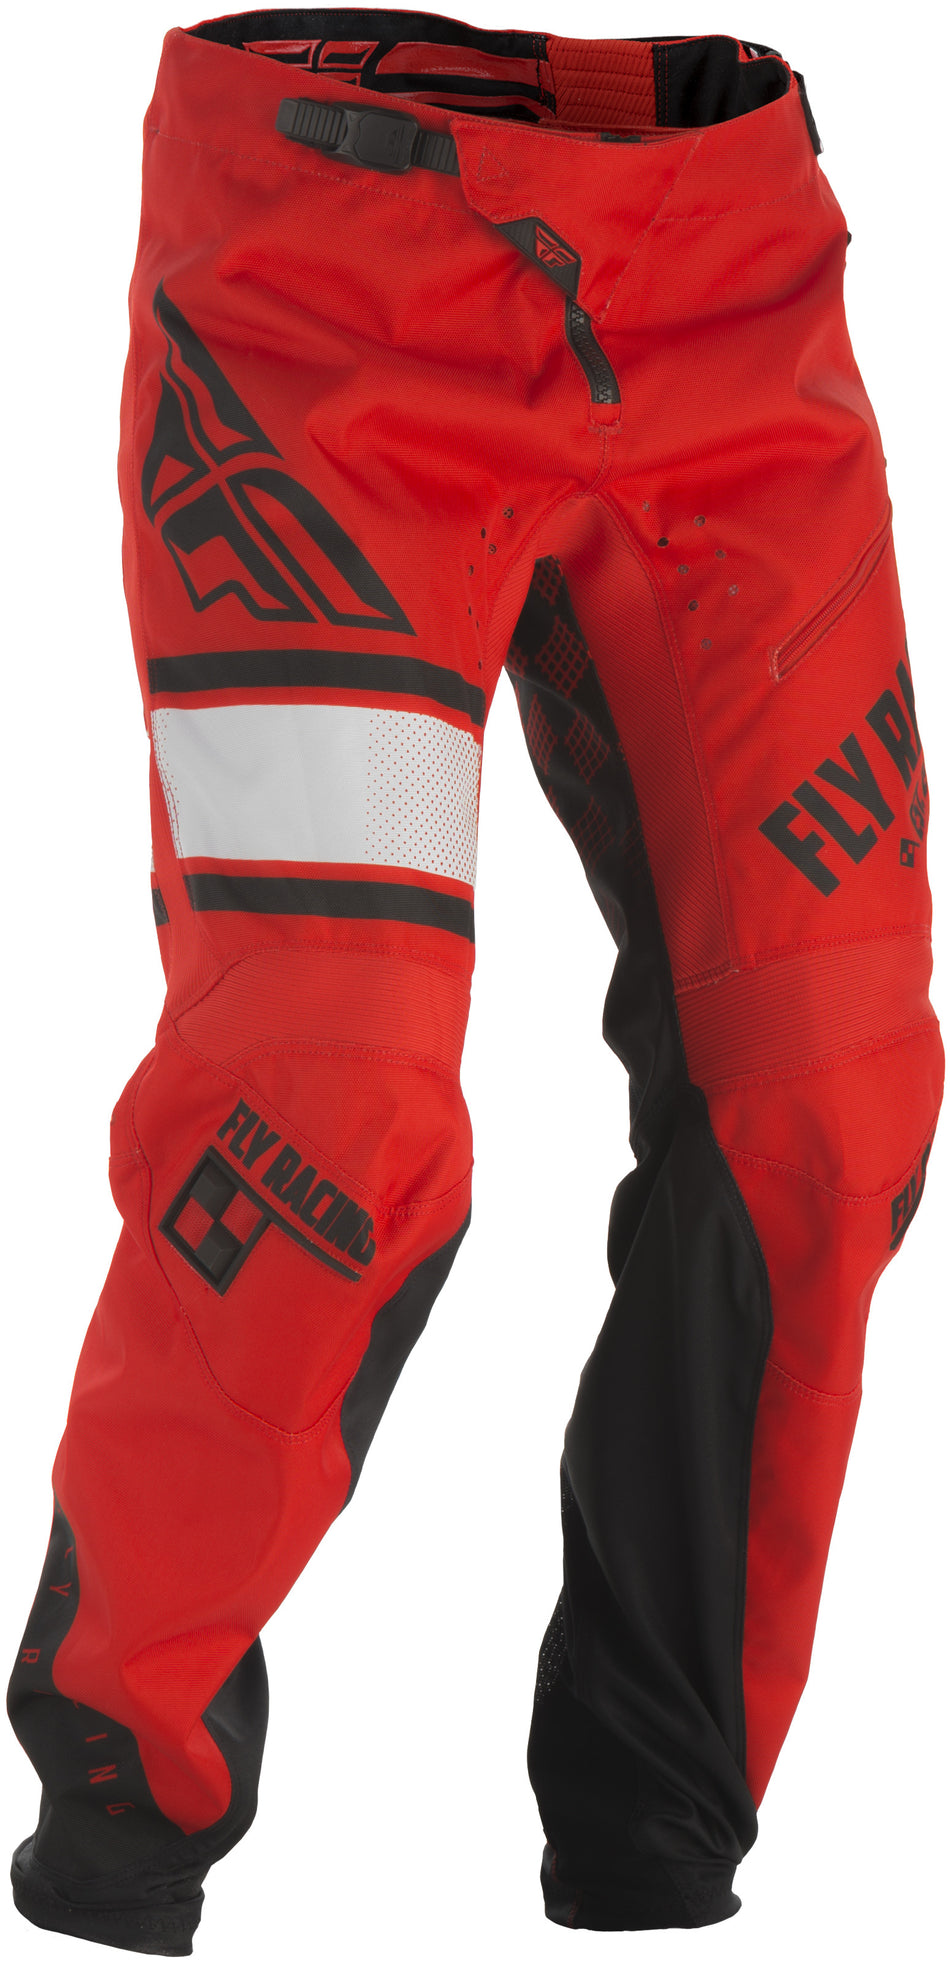 FLY RACING Kinetic Era Bicycle Pants Red/Black Sz 36 371-02236